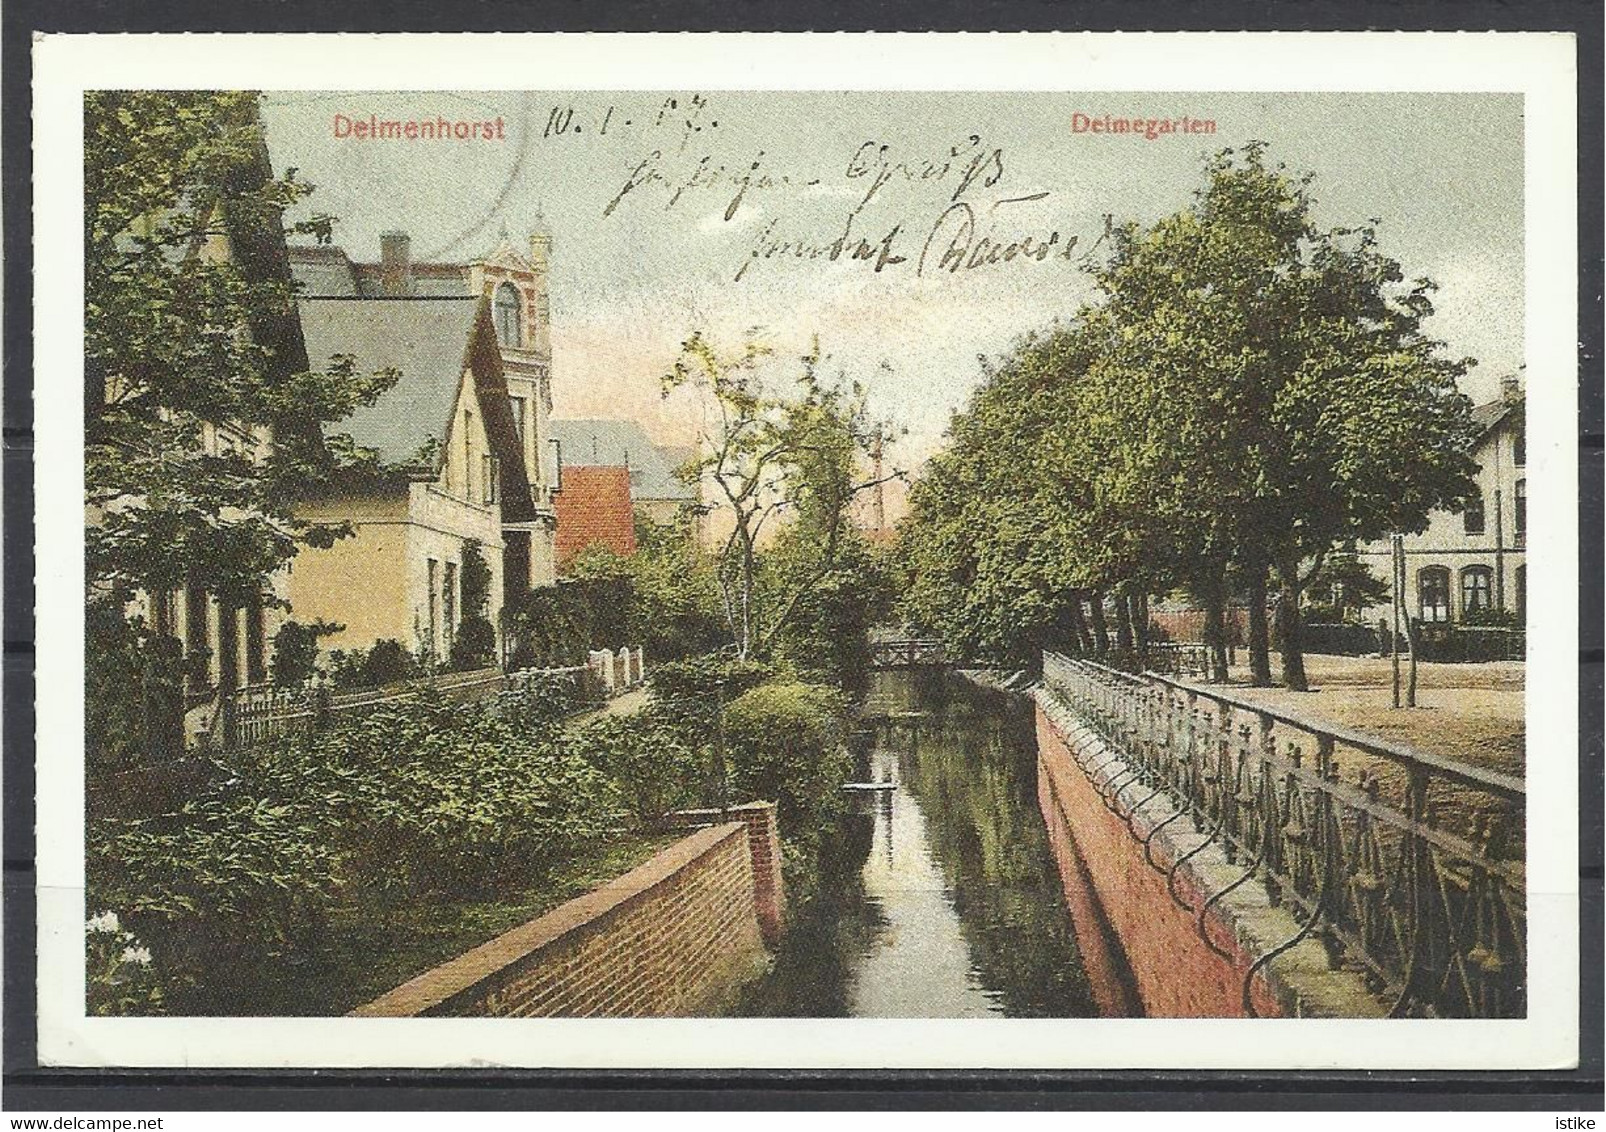 Germany, Delmenhorst, Delmegarten In 1907, Reprint, Mailed In France To Germany, 1997. - Delmenhorst